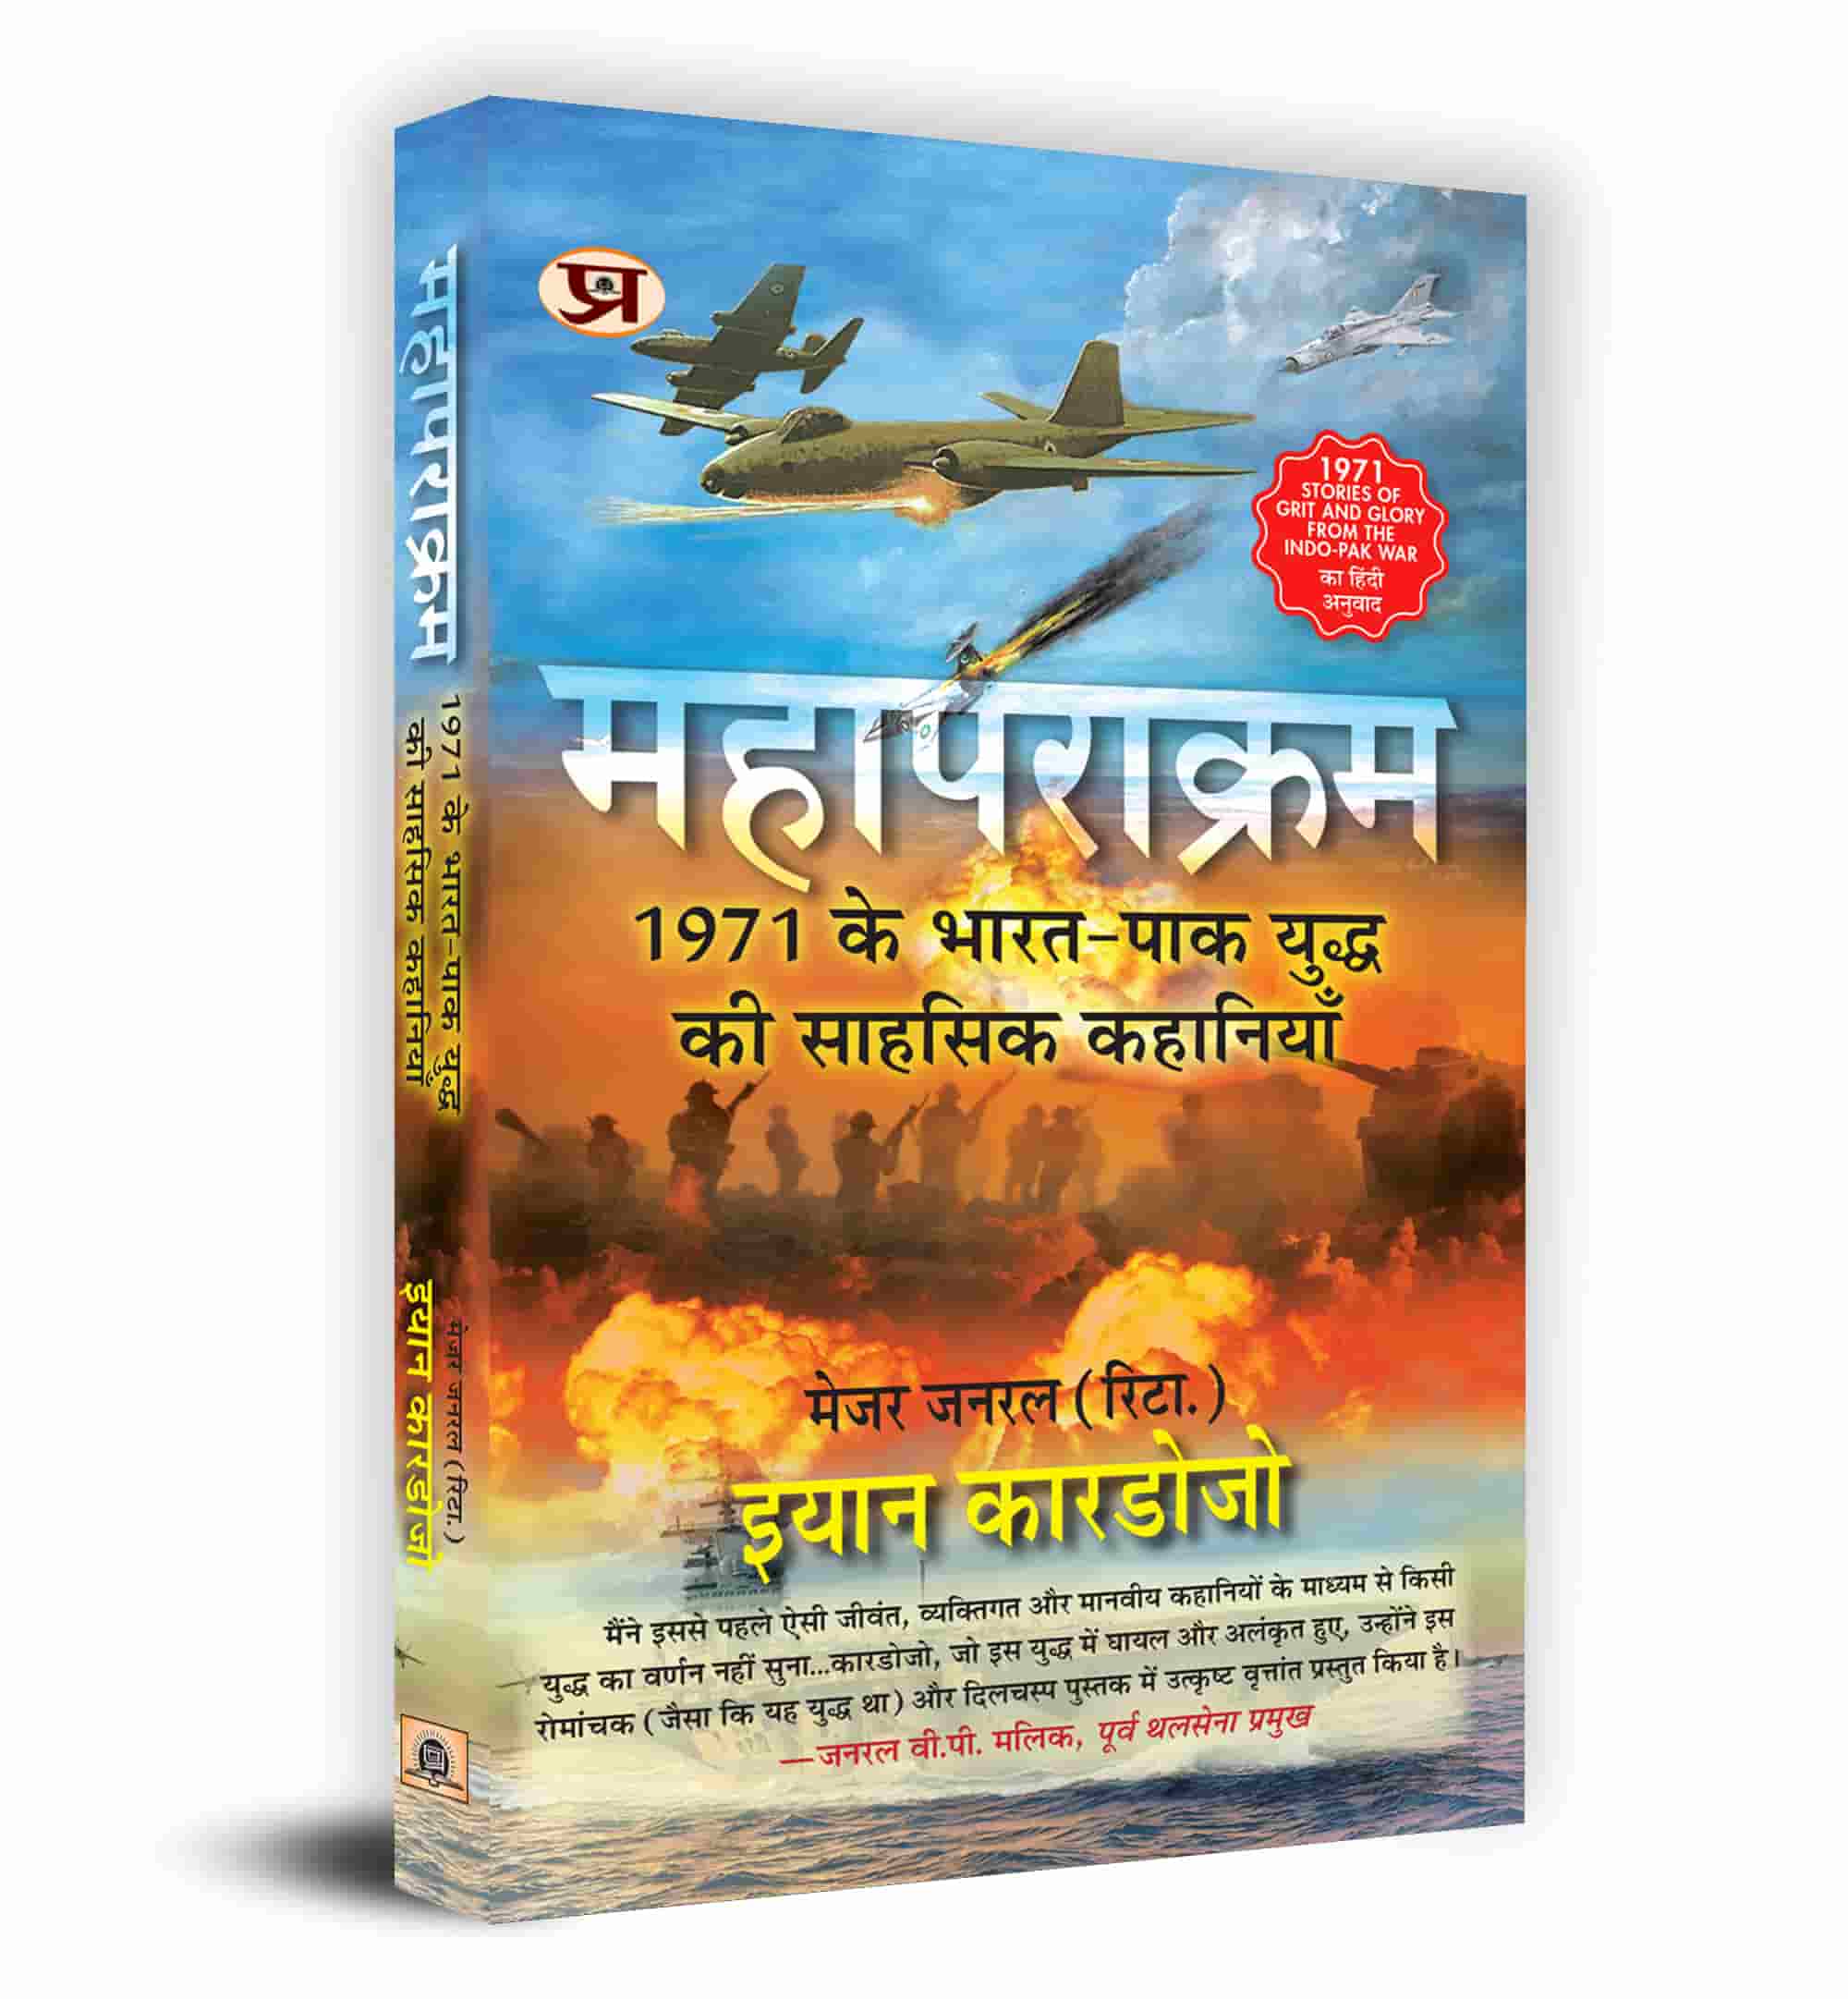 Mahaparakram (Hindi Translation Of 1971—Stories Of Grit And Glory): महापराक्रम (1971 के भारत-पाक युद्ध की साहसिक कहानियाँ) Book